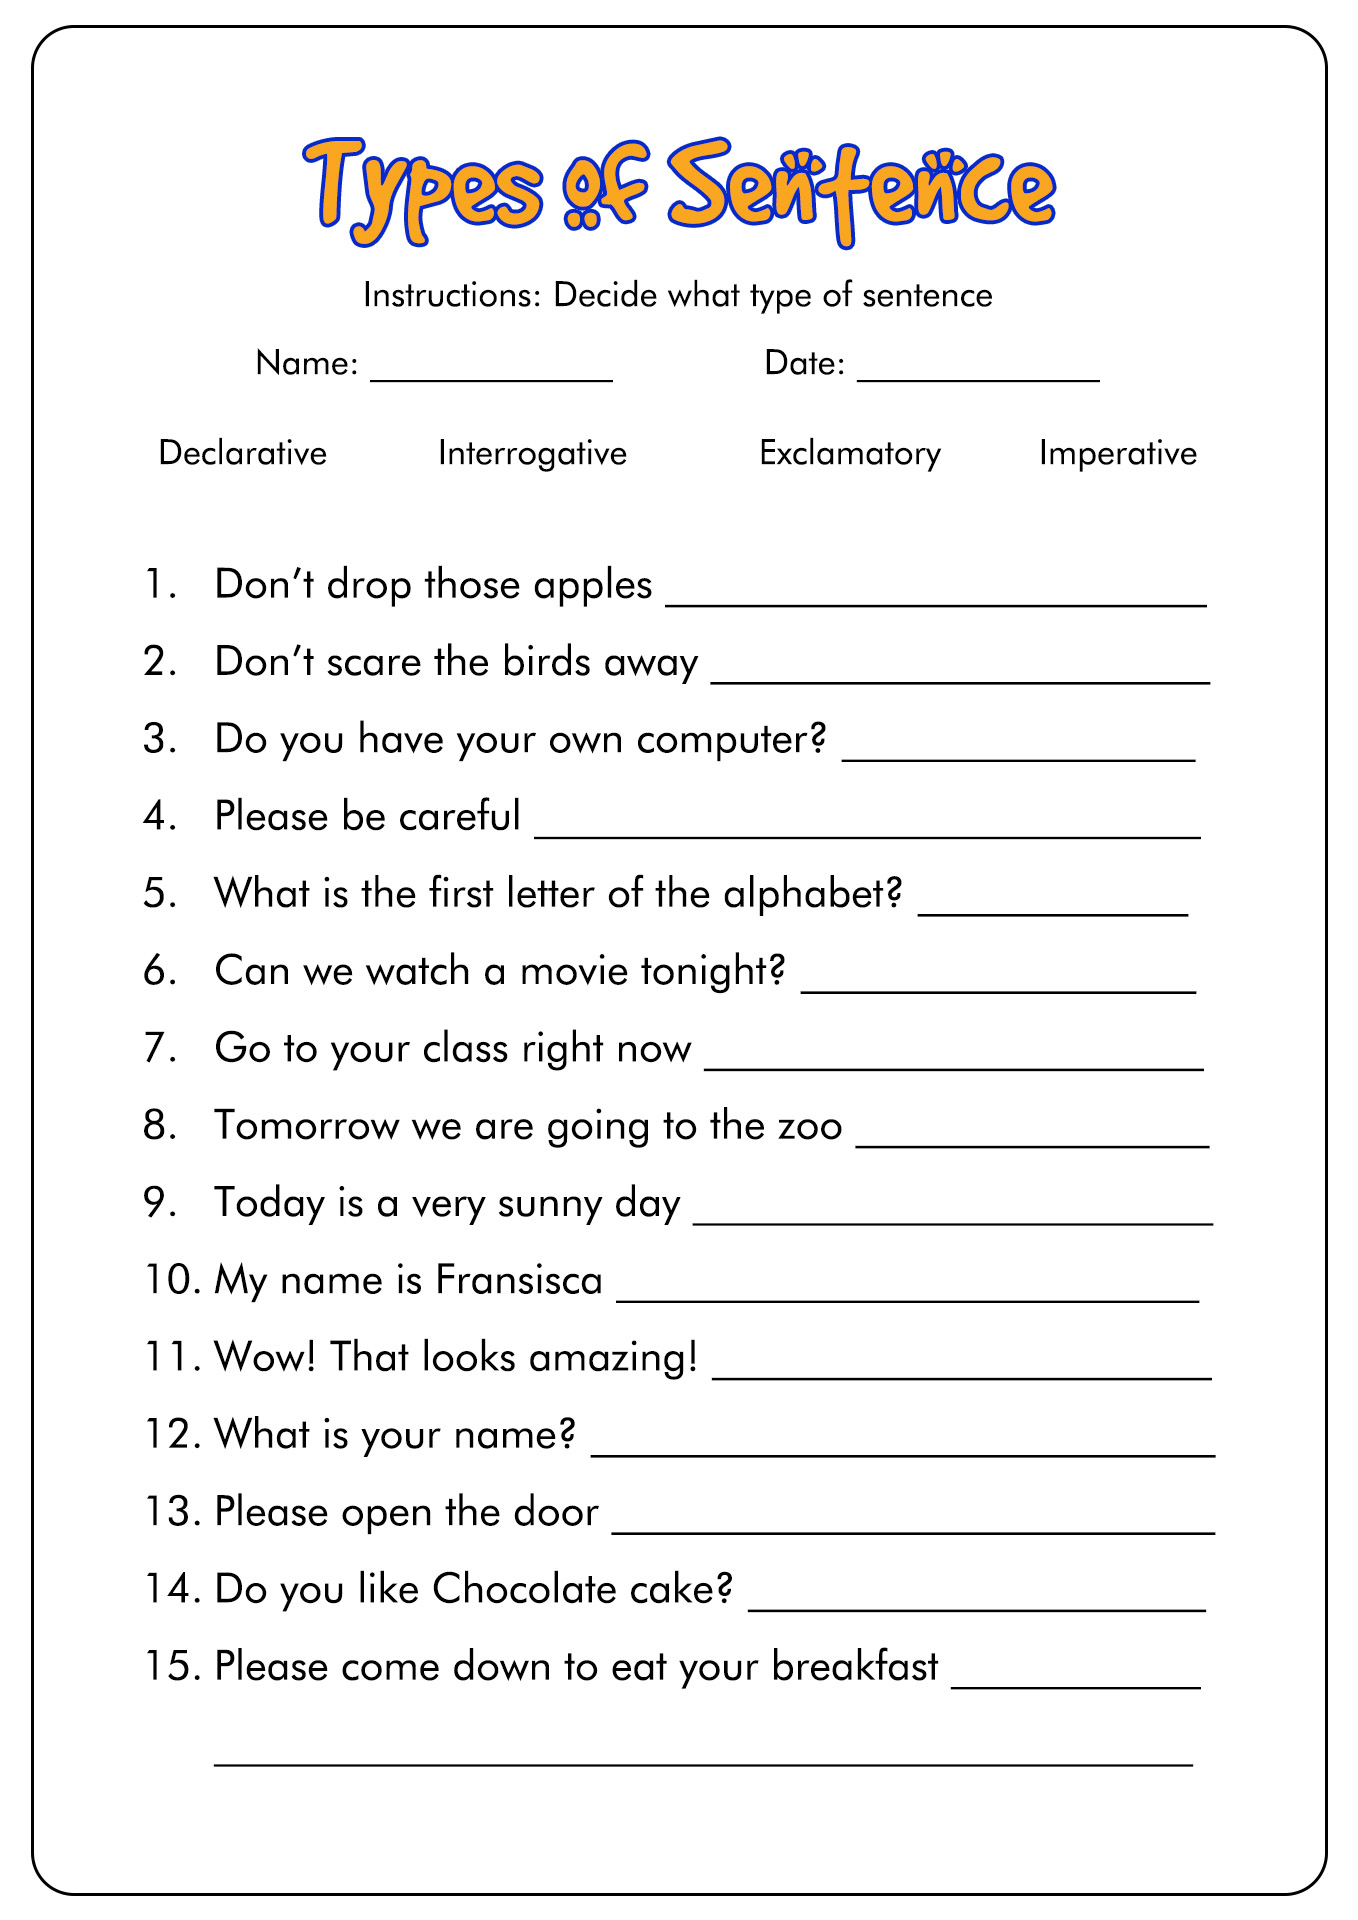 Types of Sentences Printable Worksheets Image